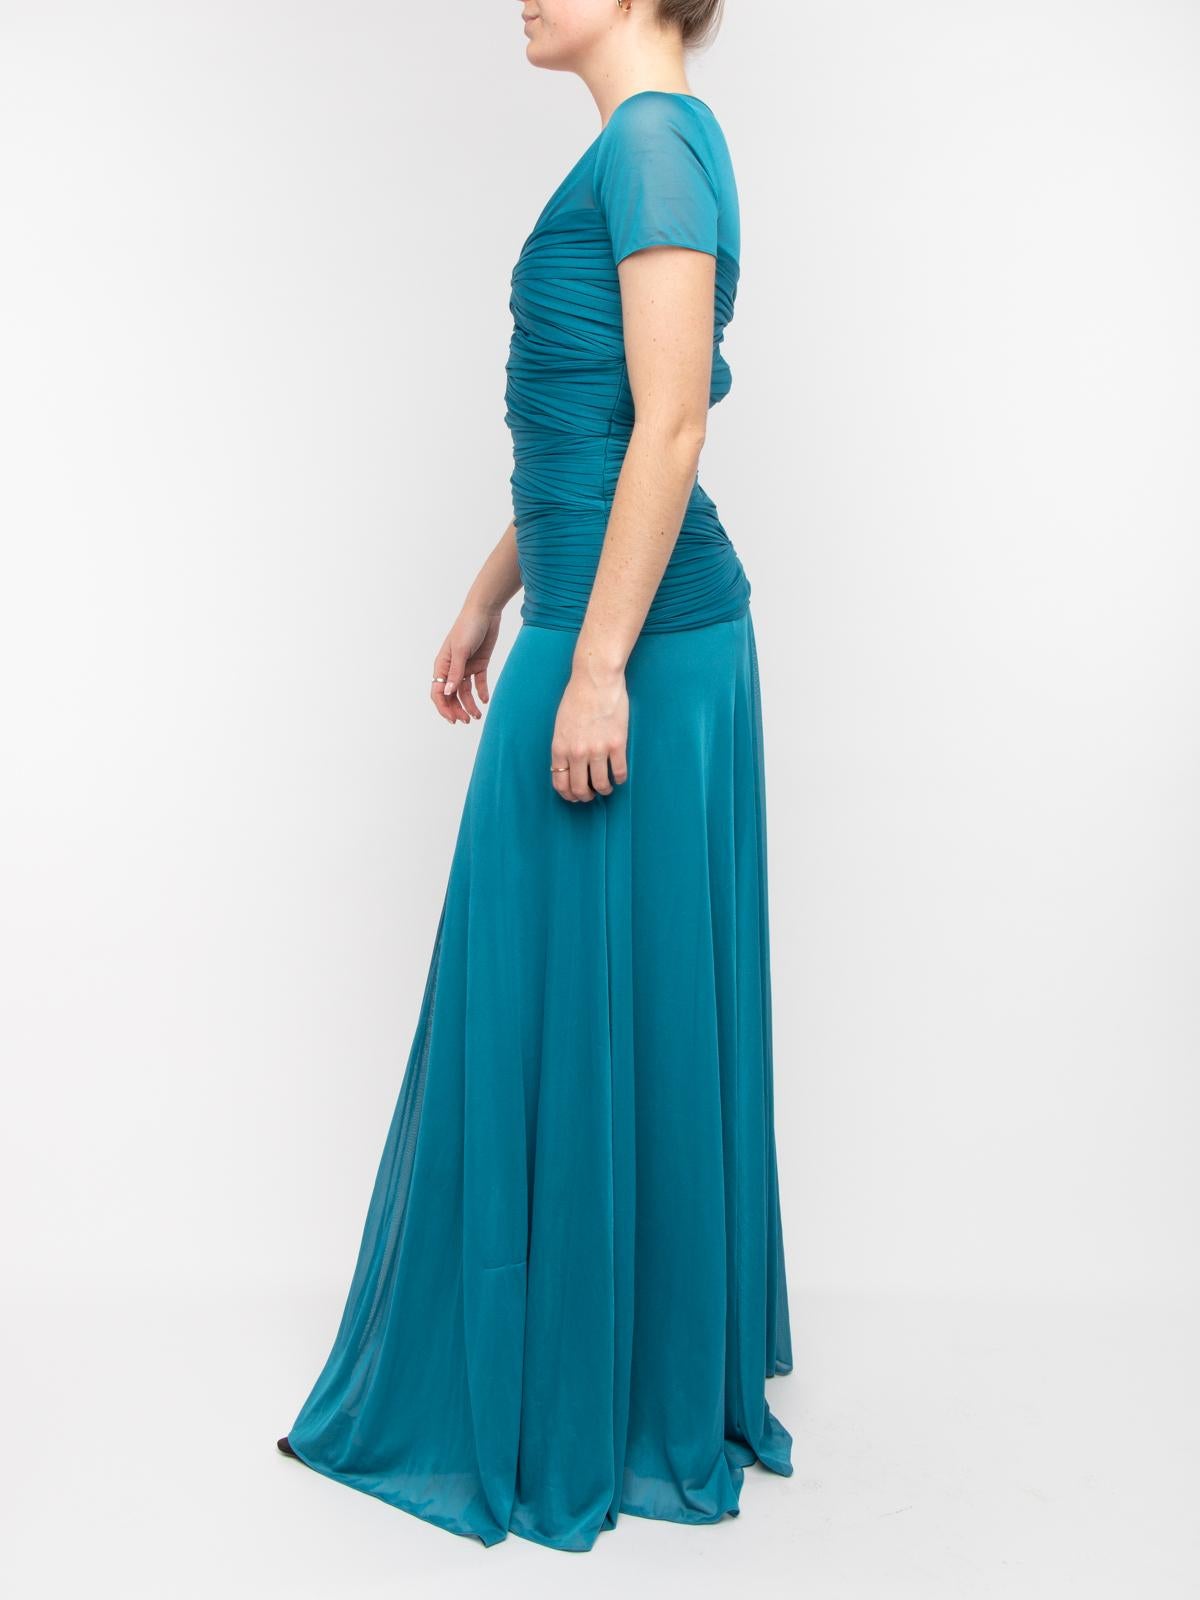 halston heritage blue dress